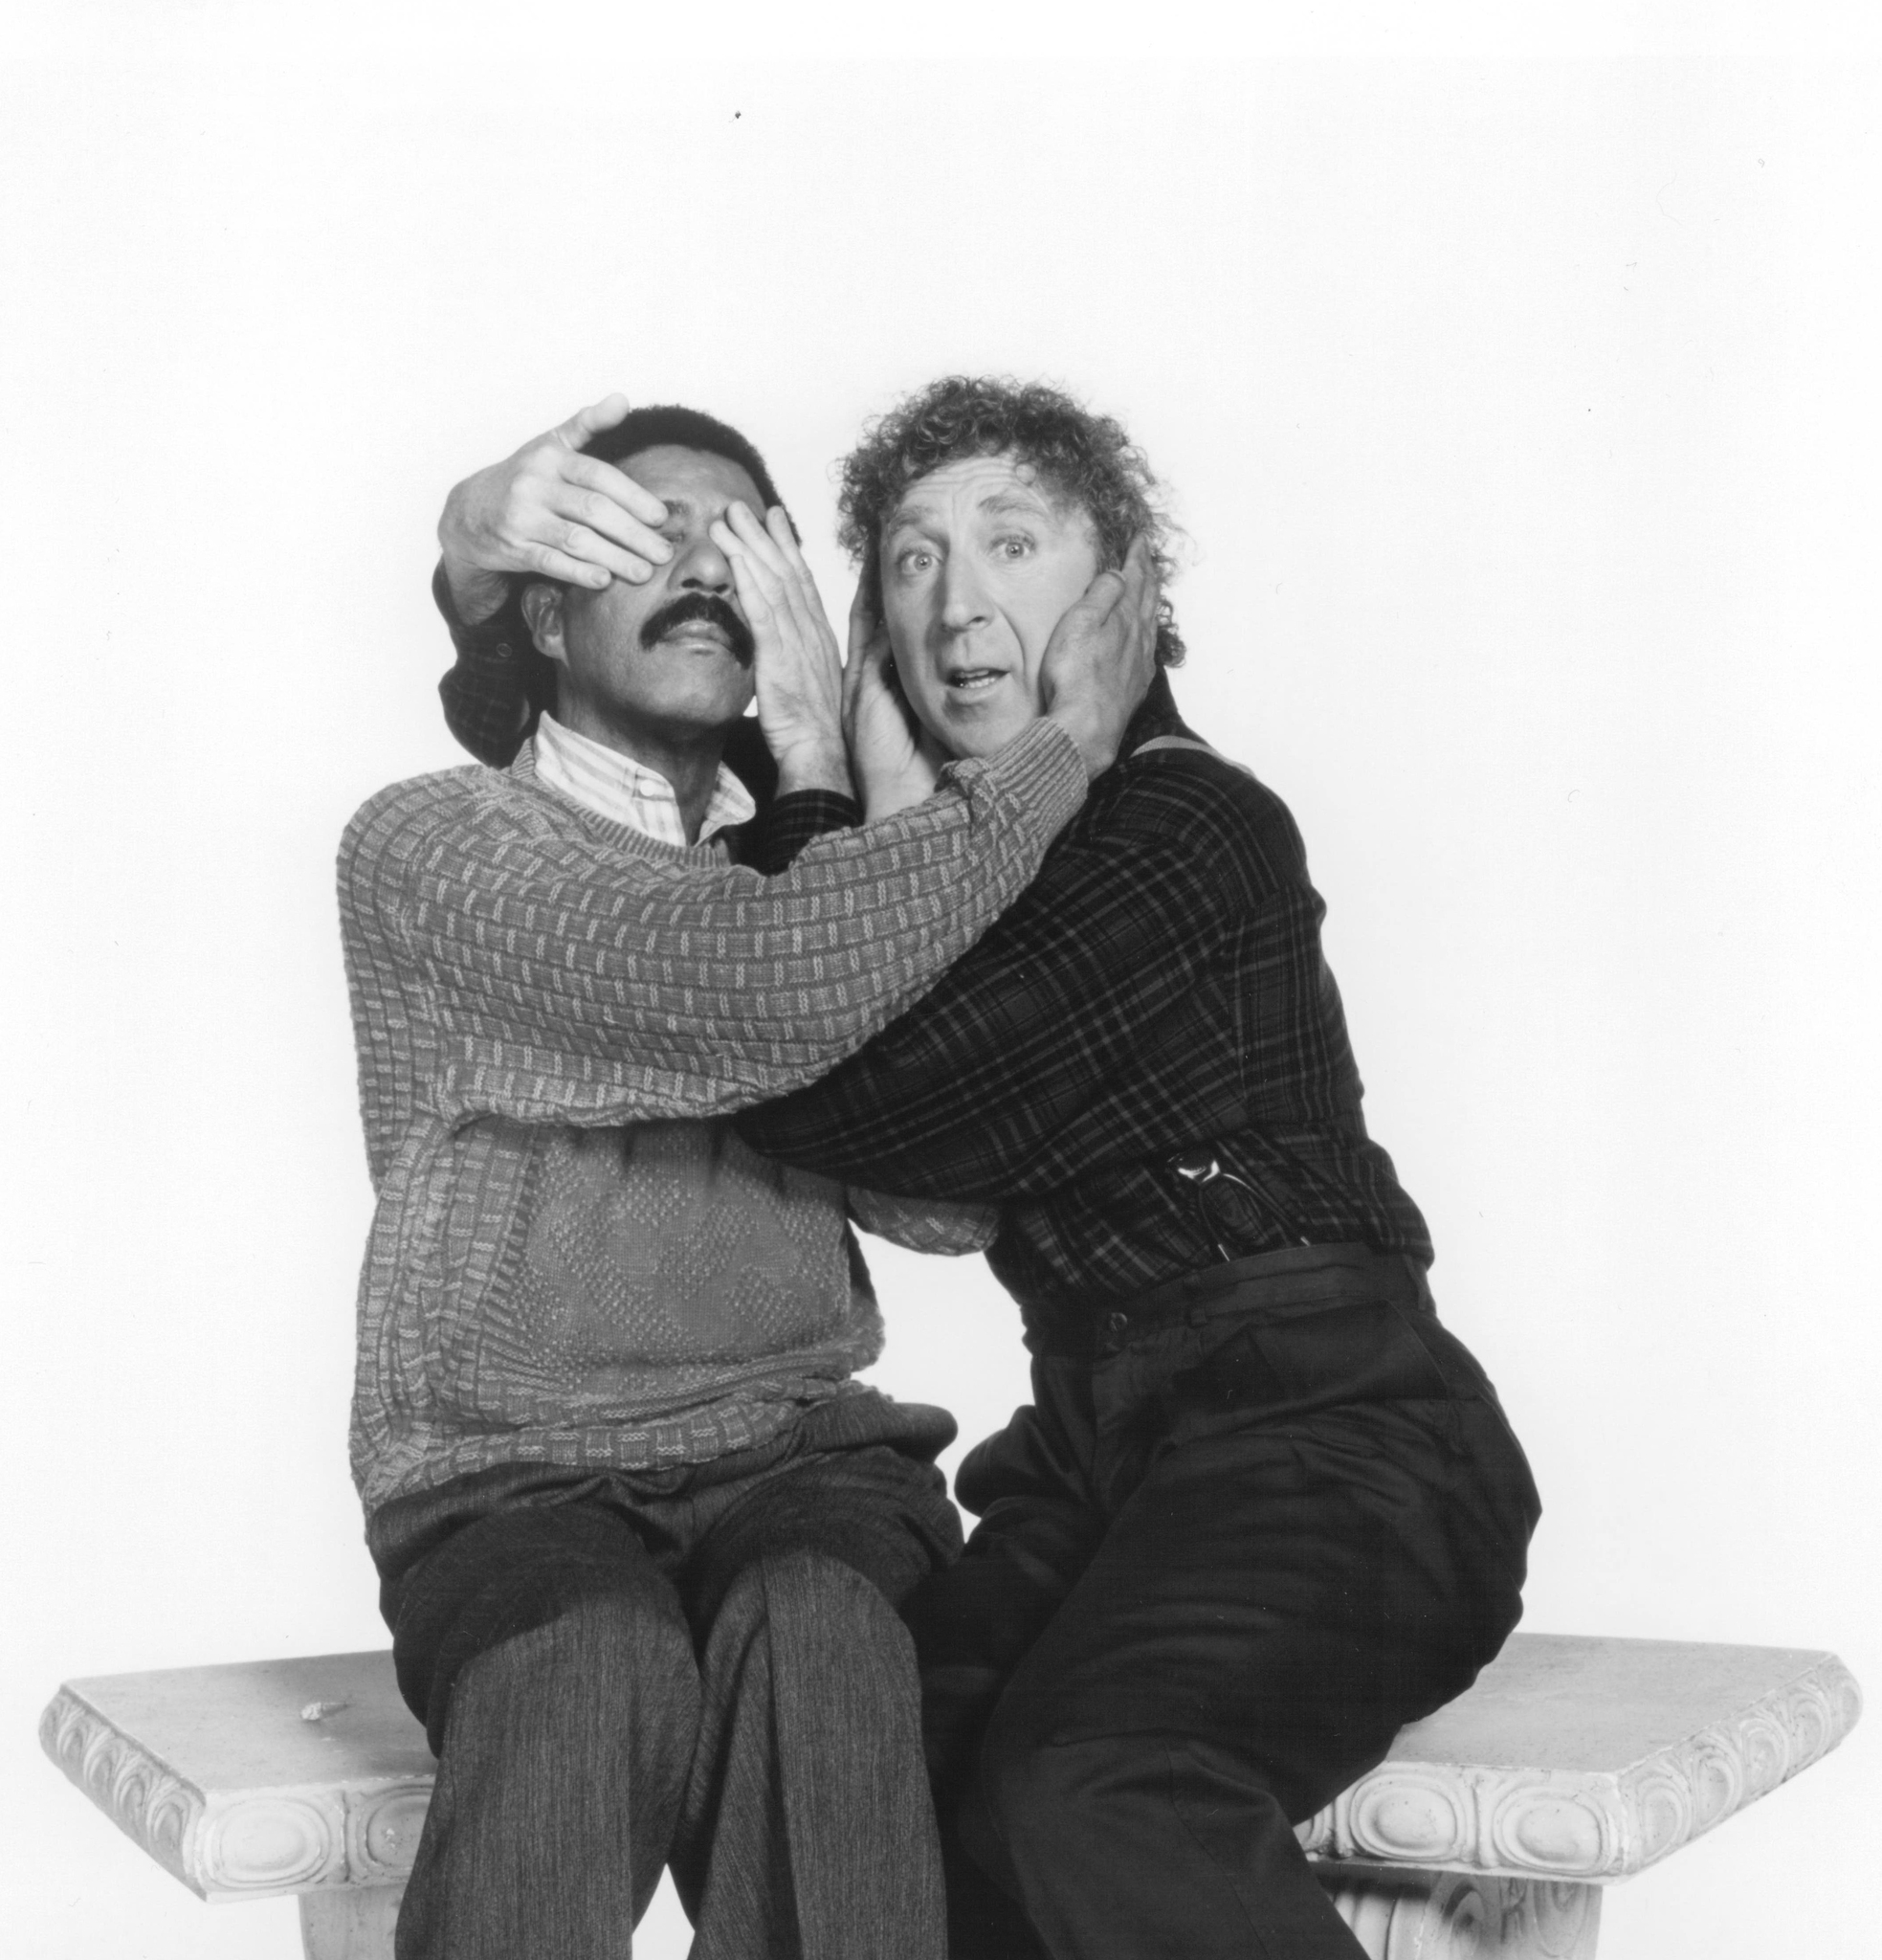 Still of Gene Wilder and Richard Pryor in See No Evil, Hear No Evil (1989)